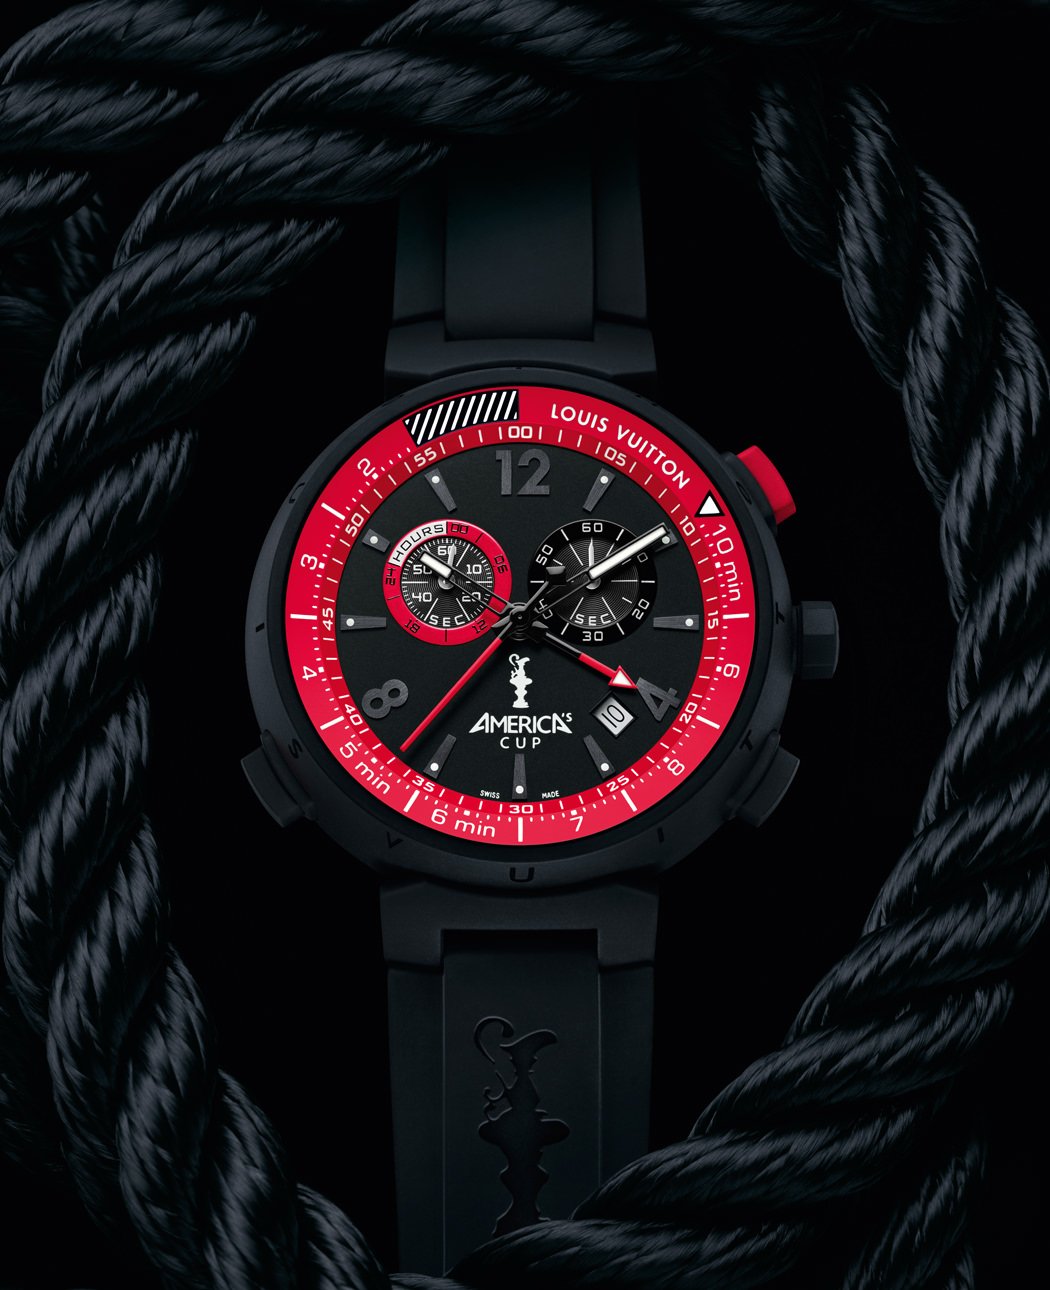 Louis Vuitton Tambour Regatta LV Cup Automatic Chronograph Watch